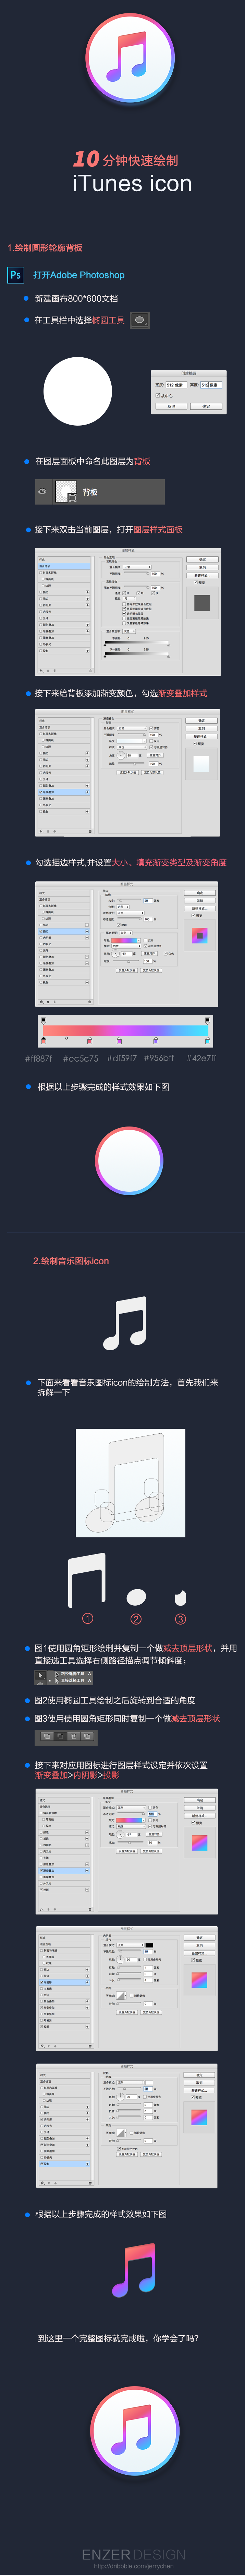 icon图标，10分钟快速绘制iTunes icon